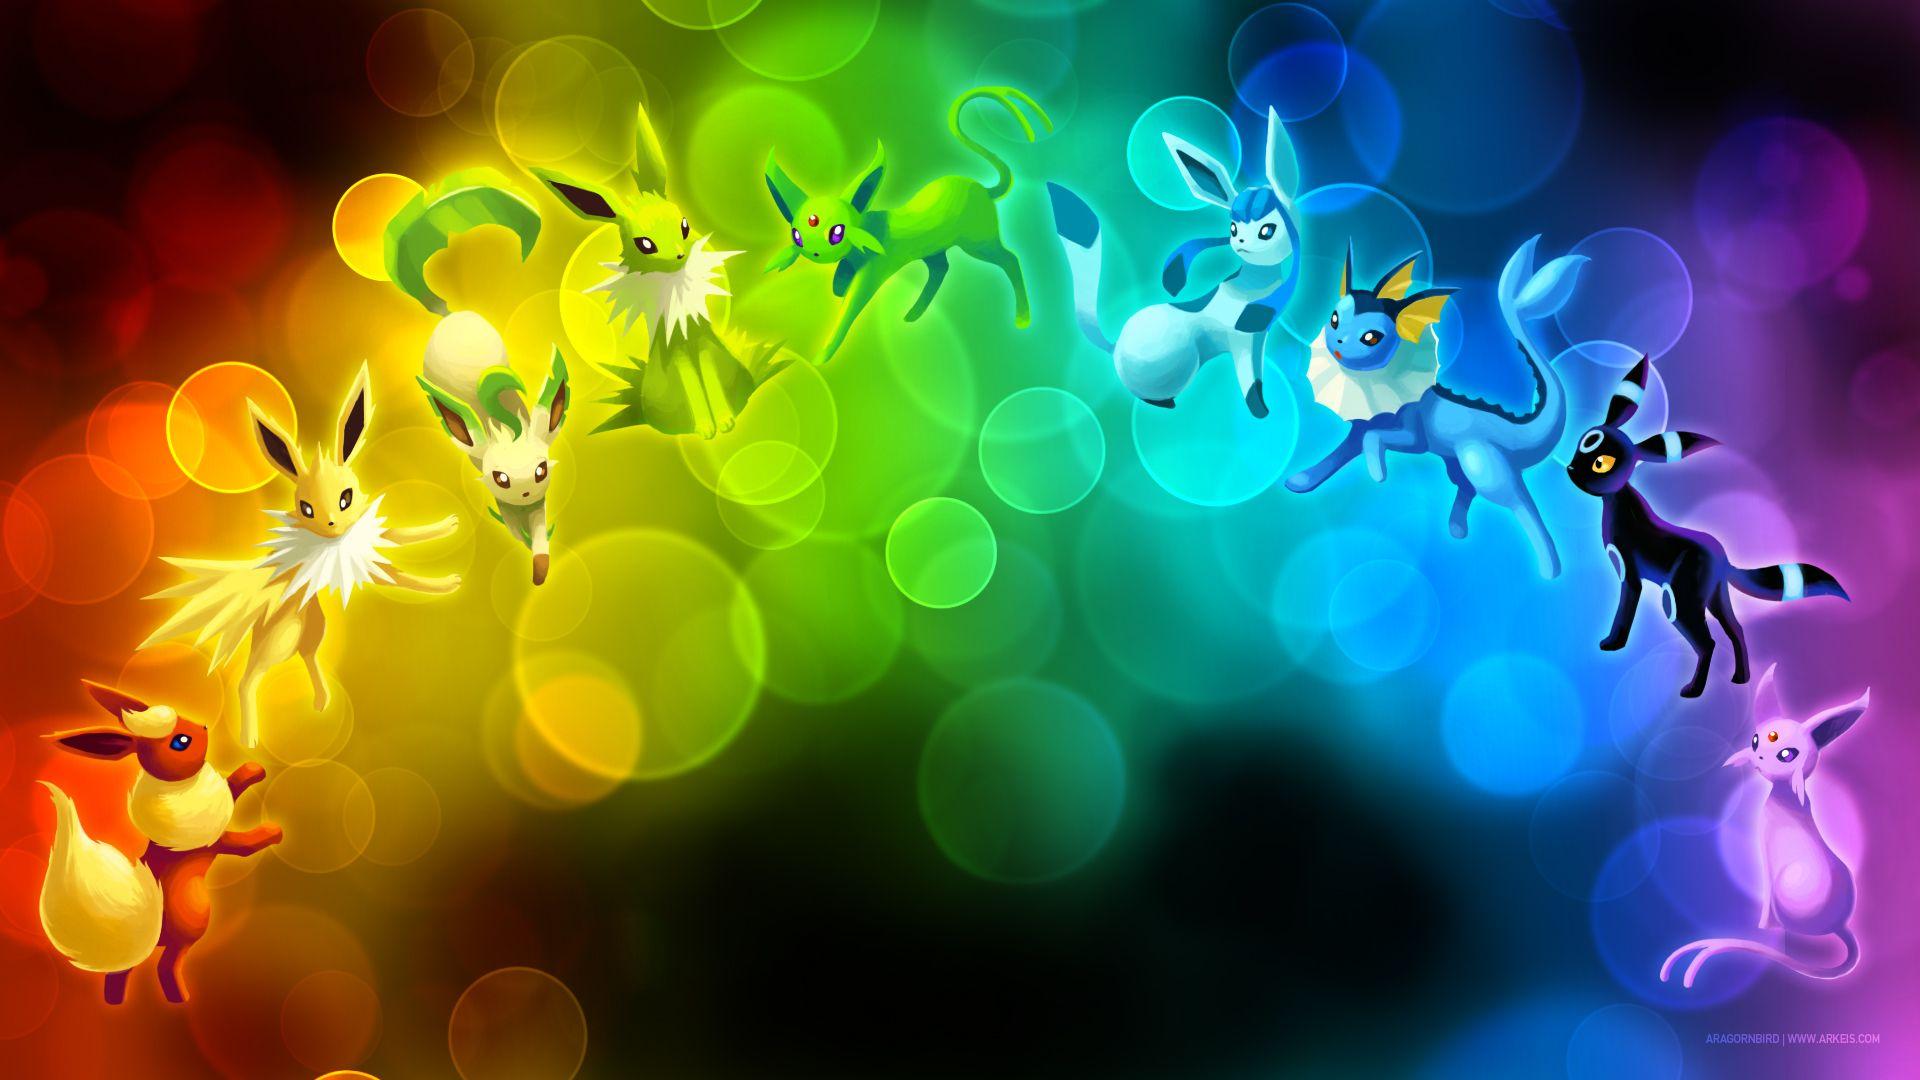 Eevee rainbow, eeveelutions! pokemon art Flareon, Jolteon